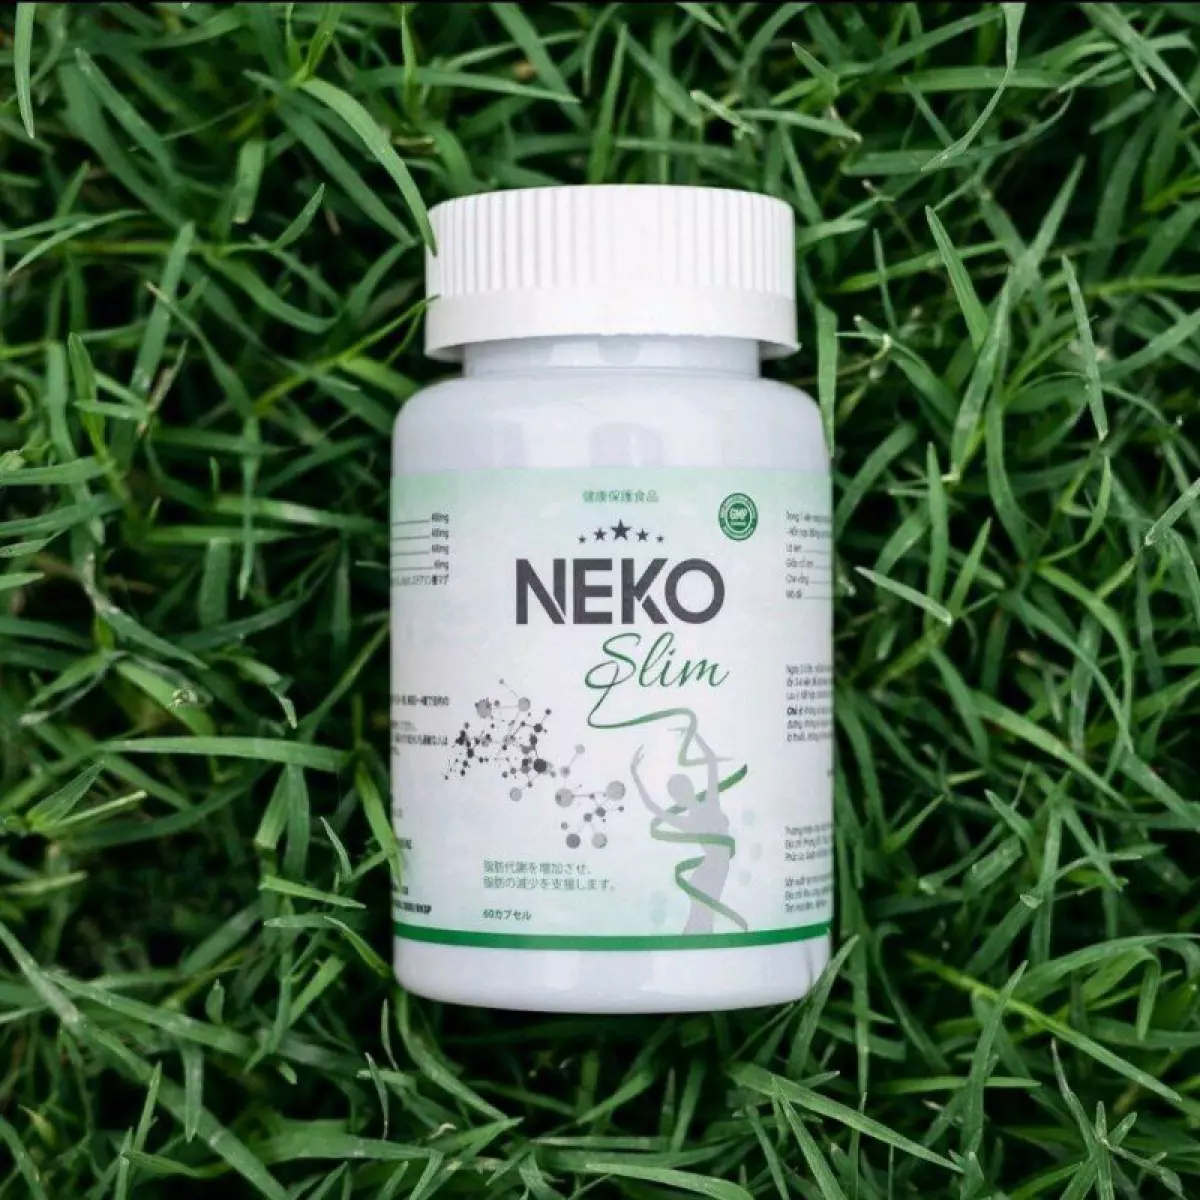 Neko Slim - TPBVSK hỗ trợ giảm cân từ Nhật Bản (Hộp 60 viên)